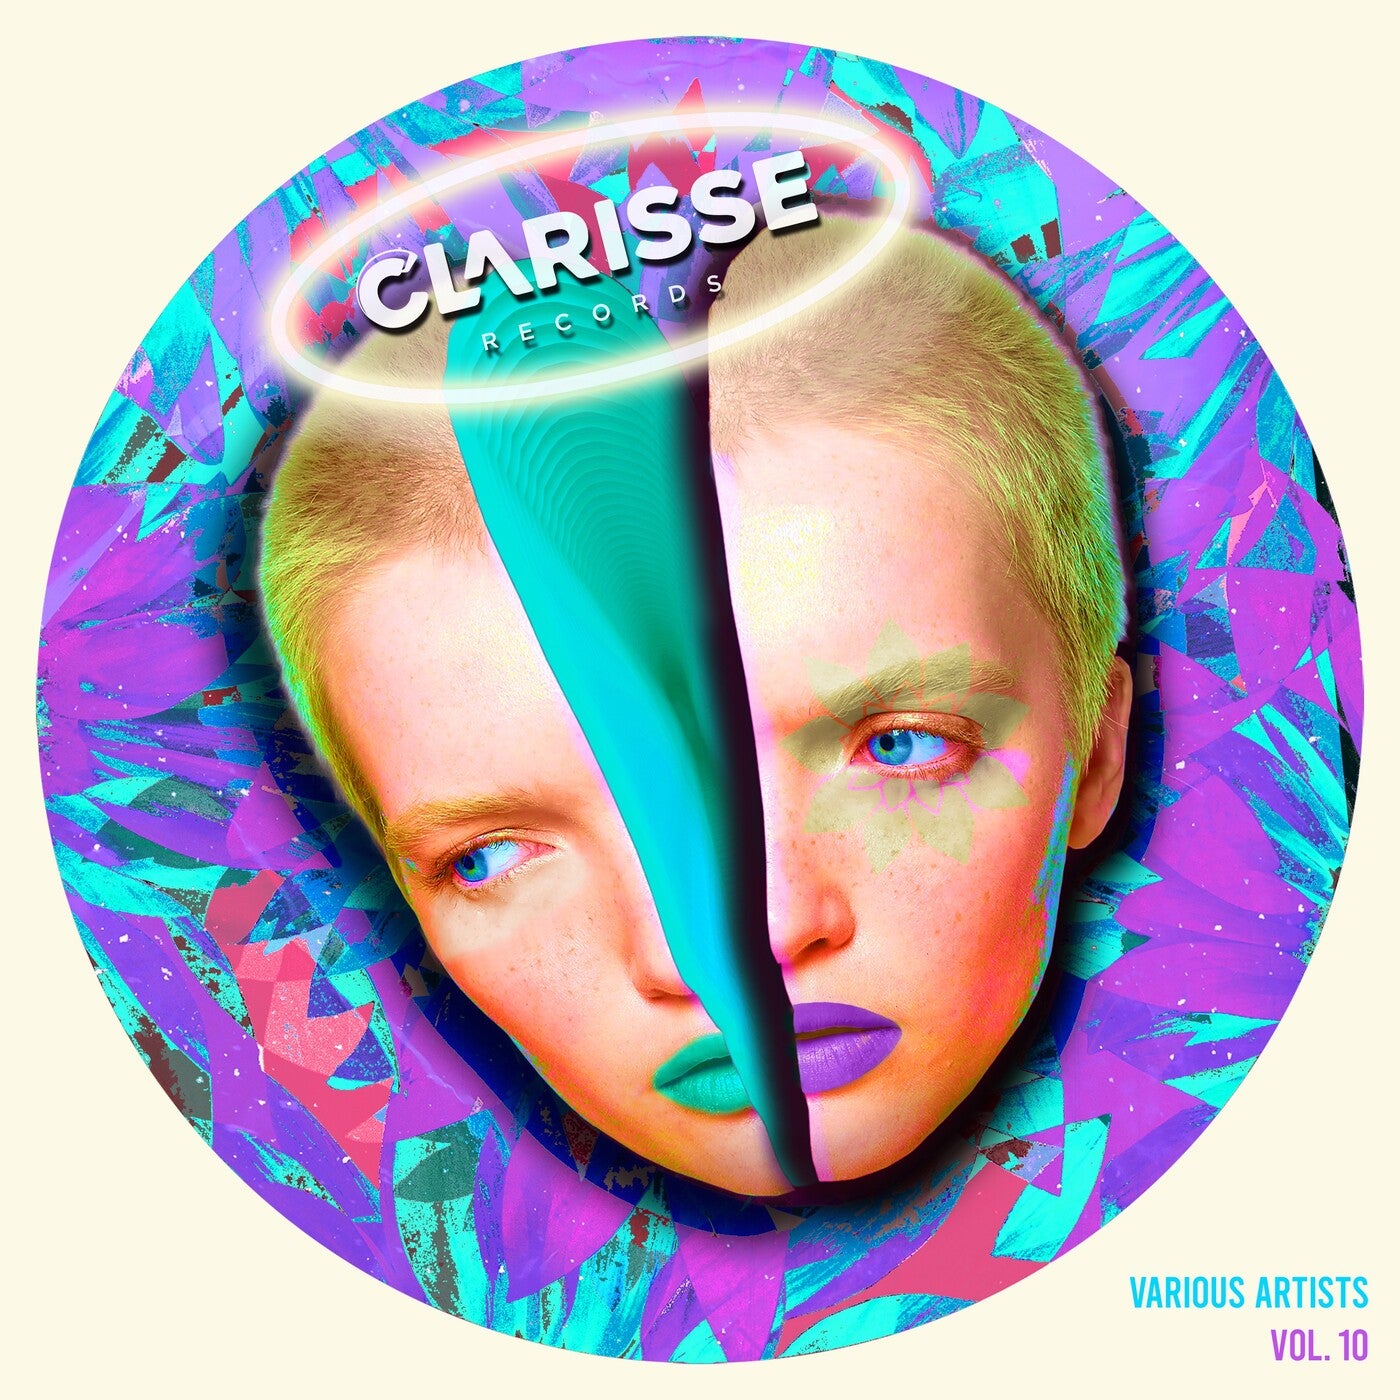 image cover: VA - Clarisse Various Artists, Vol. 10 on Clarisse Records